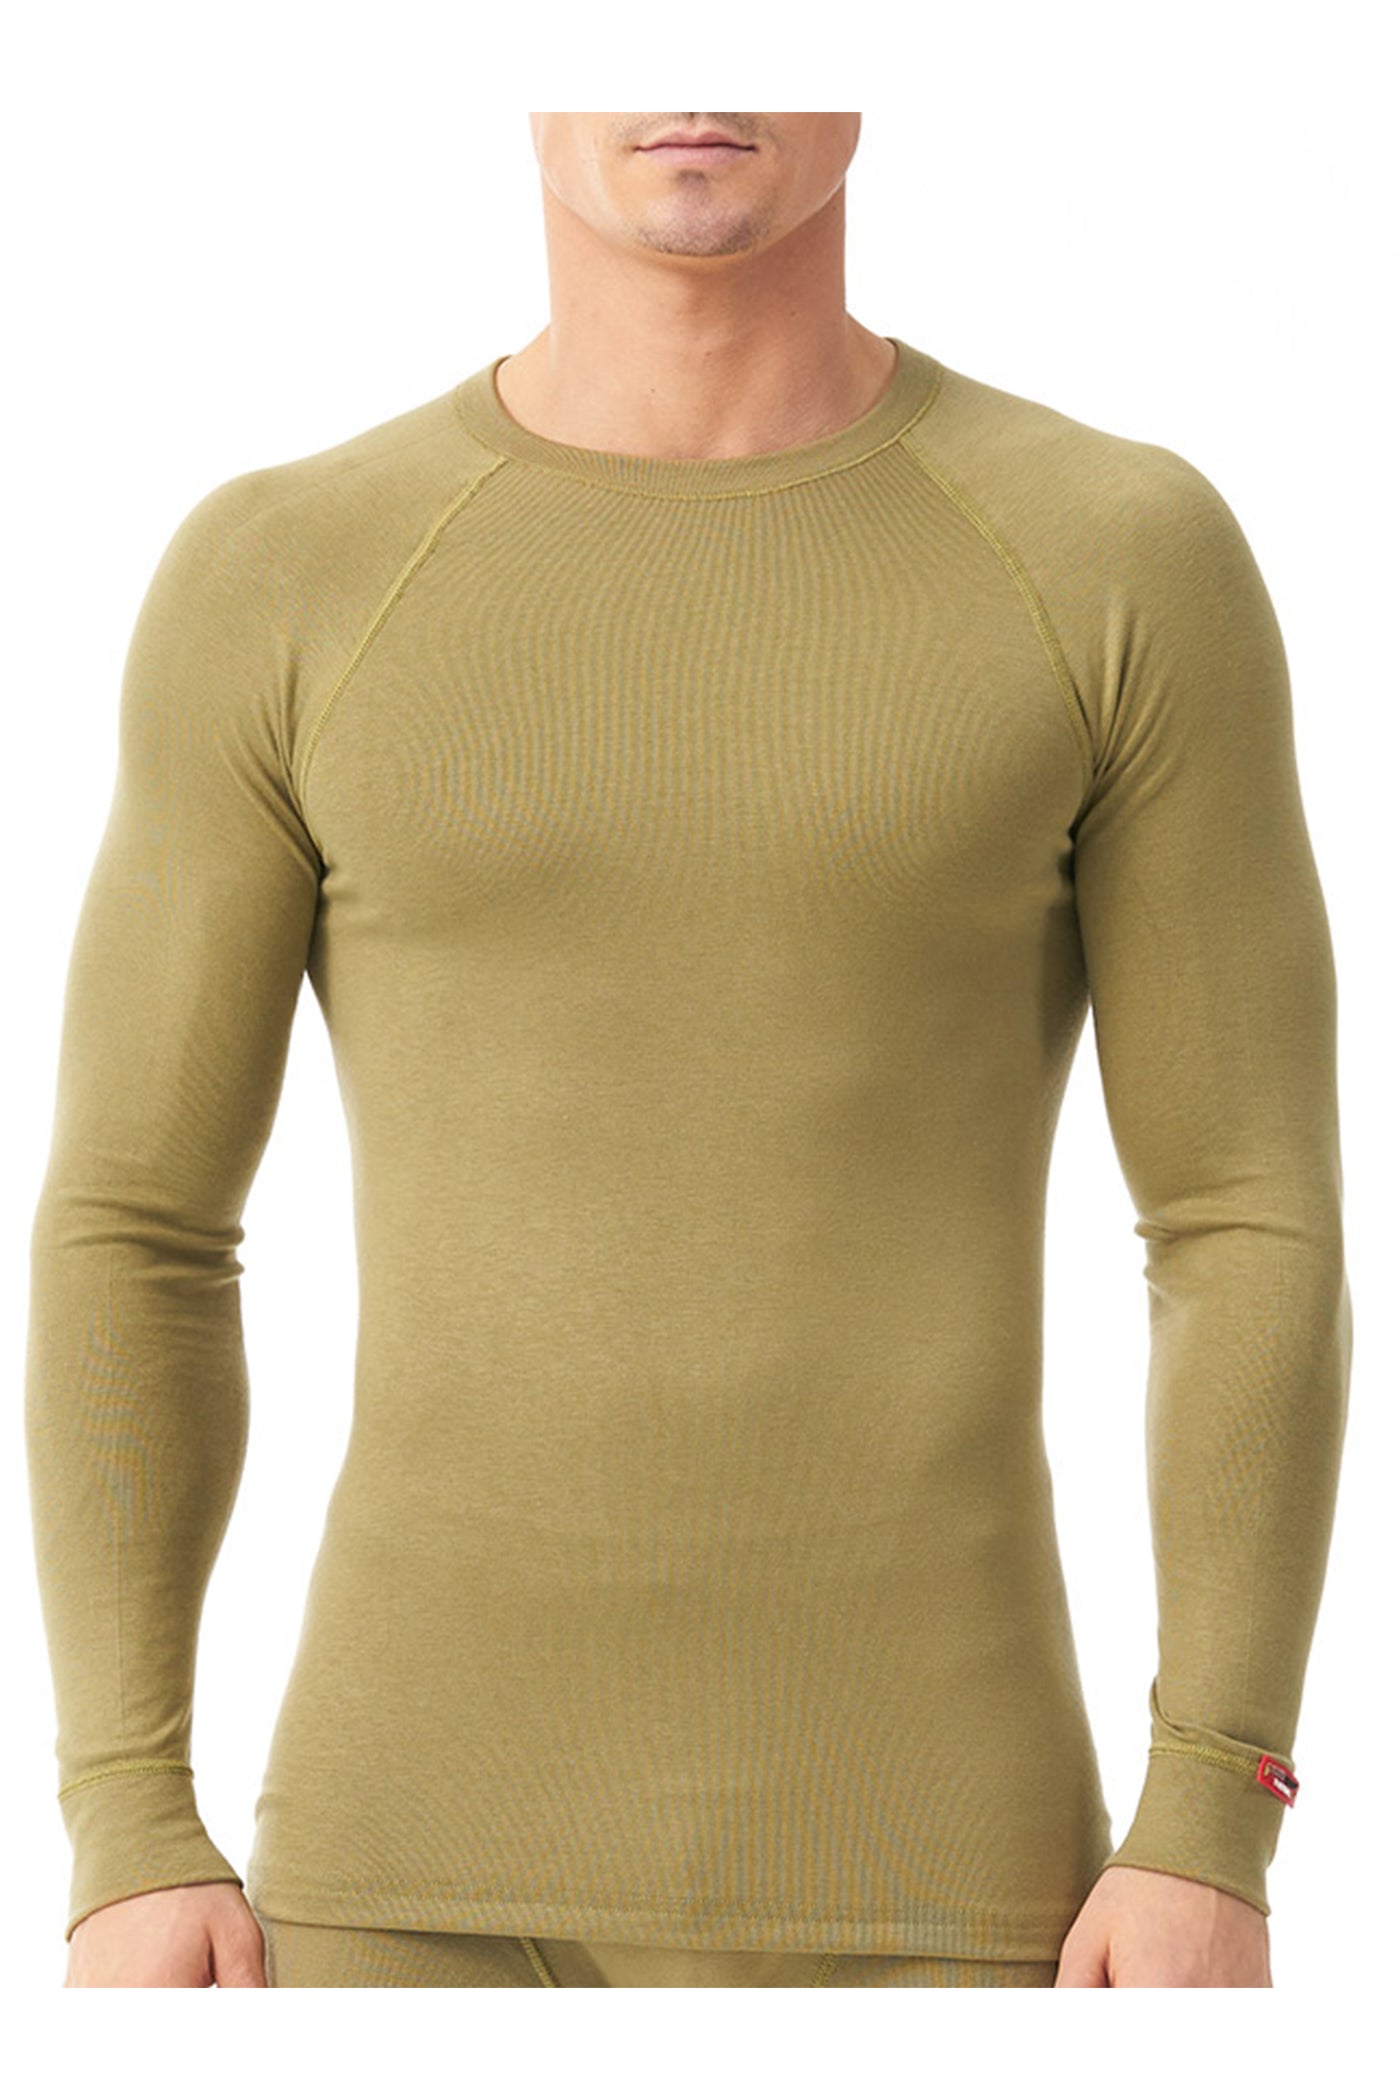 blackspade-Men's thermal long sleeve t-shirt-9259, level-2-underwear-camel